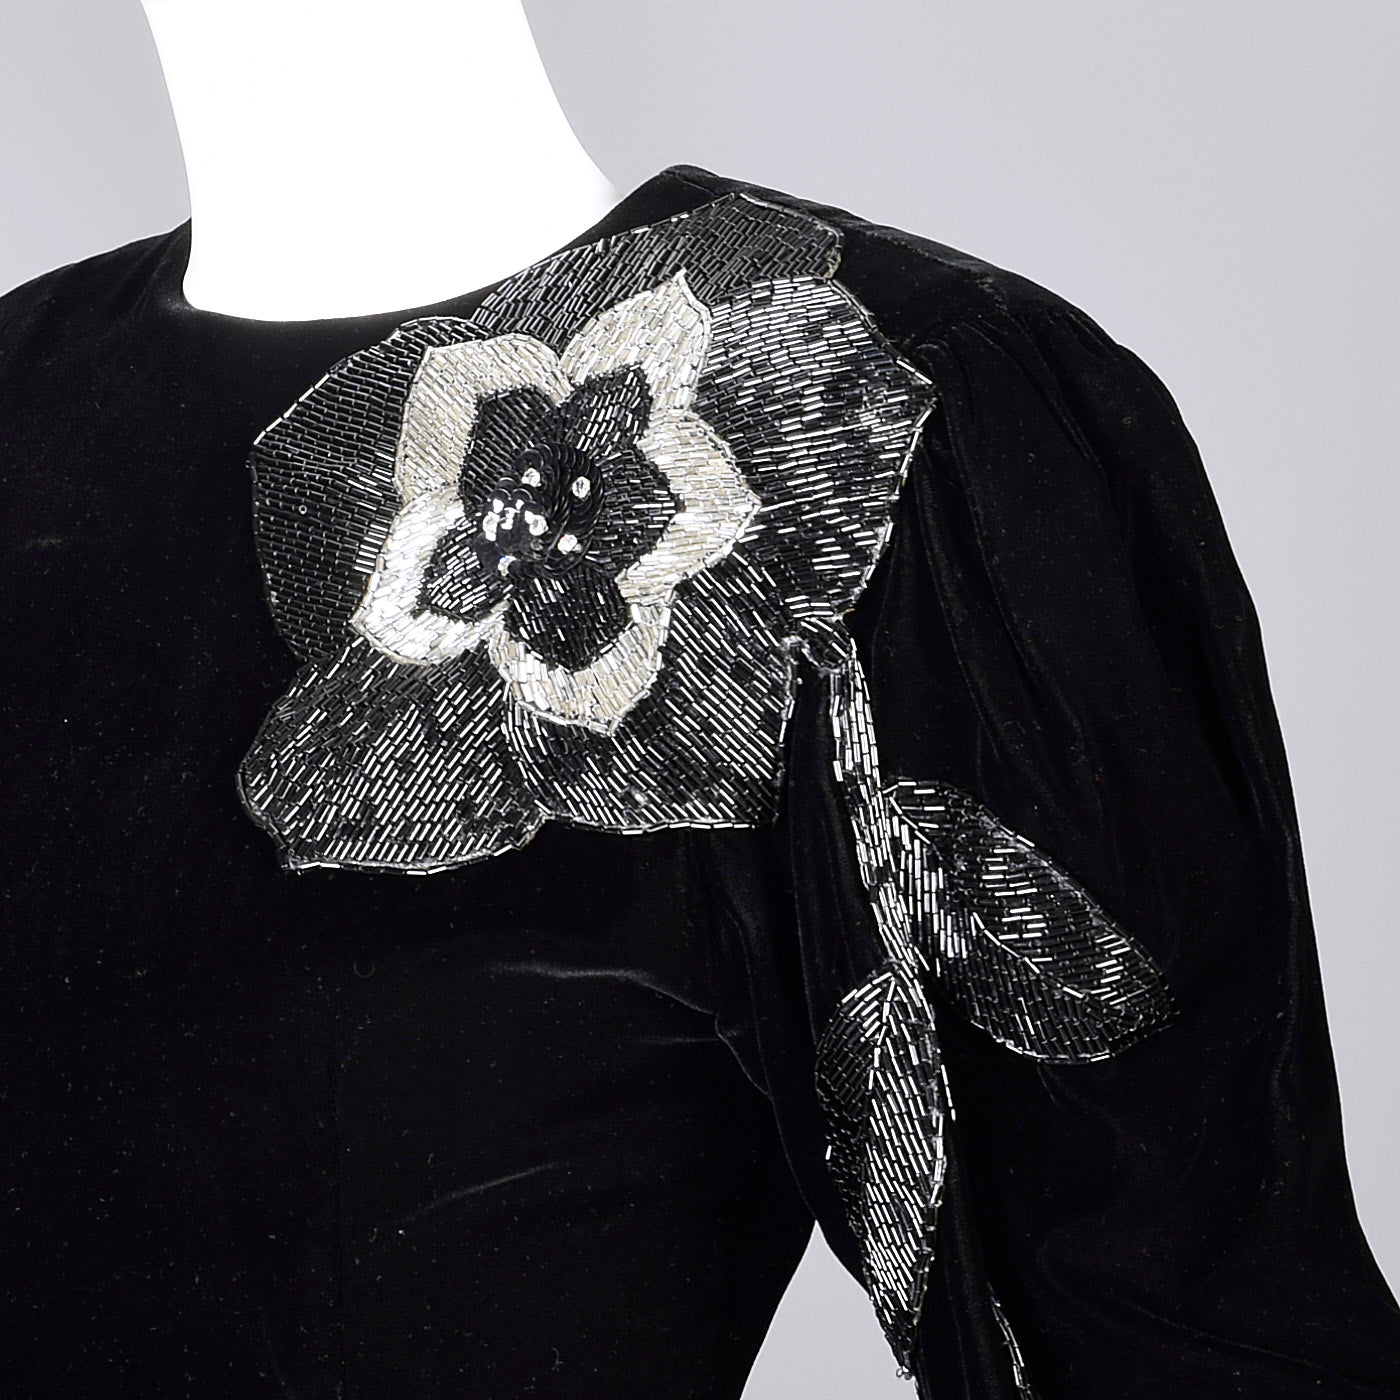 1980s Bill Blass Black Velvet Evening Gown with Beaded Flower & Mutton Sleeves